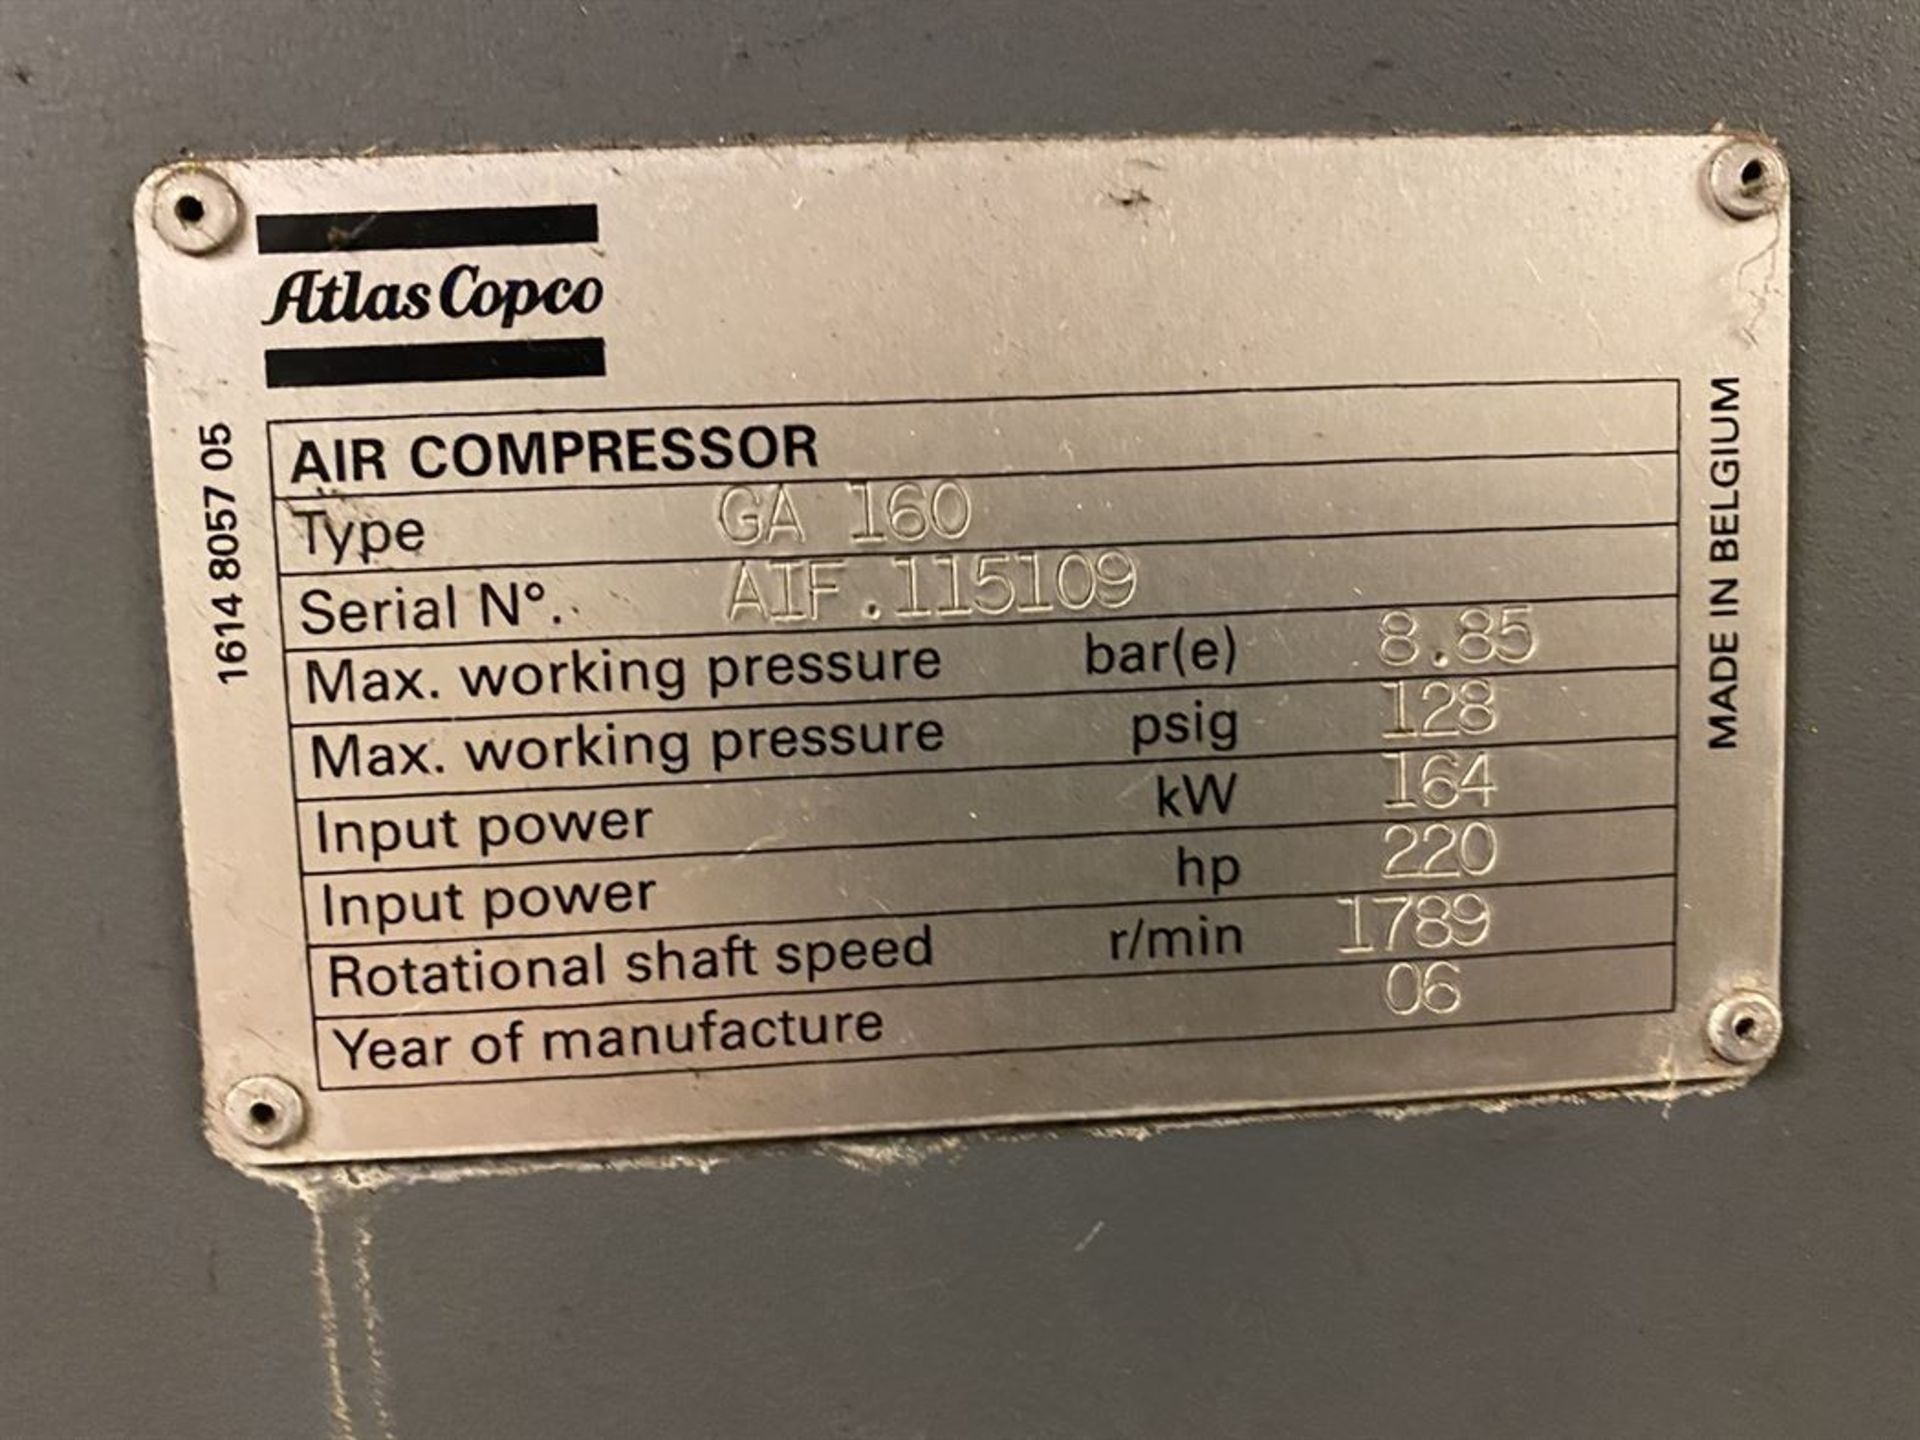 2006 Atlas Copco GA 160 Rotary Screw Air Compressor, s/n AIF.115109, 220 HP, 128 PSIG Max Working - Image 4 of 4